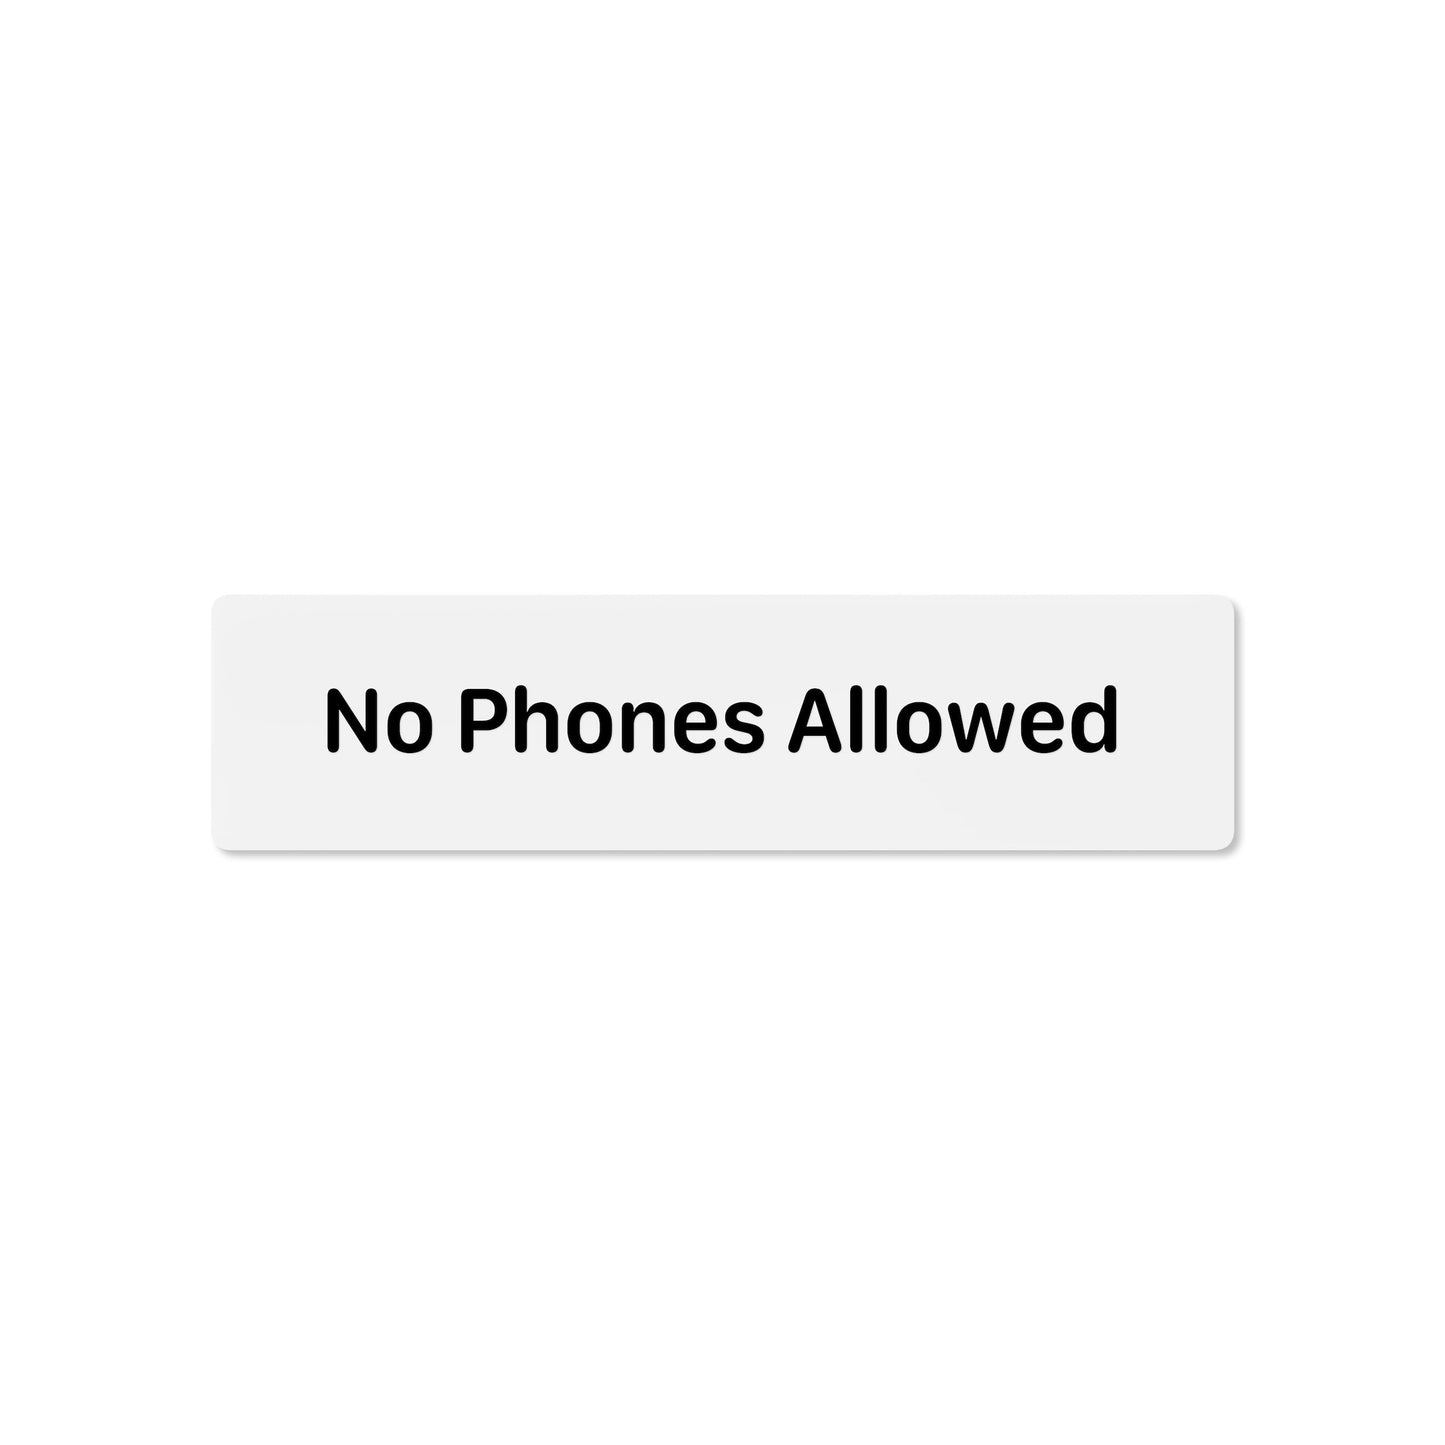 No Phones Allowed